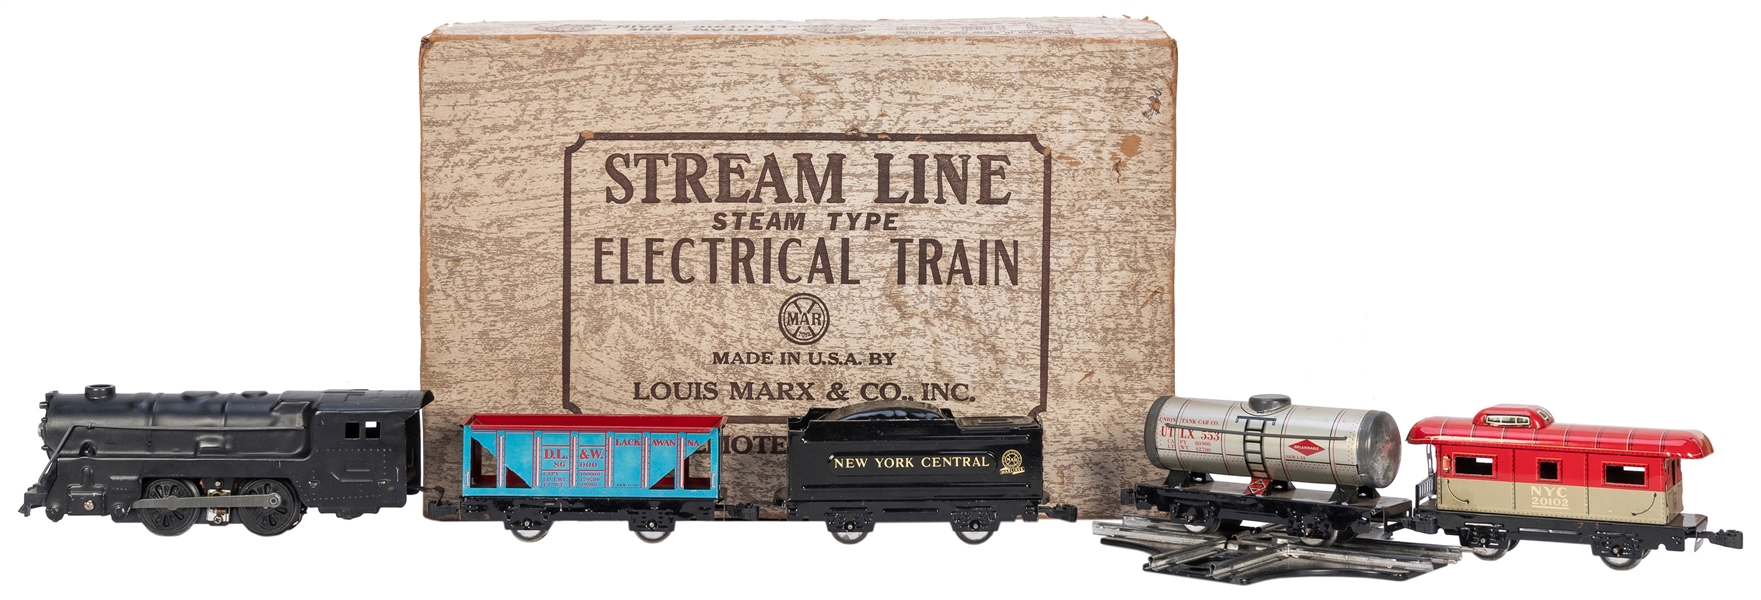  Marx Marlines Stream Line Electrical Train Set in Original ...